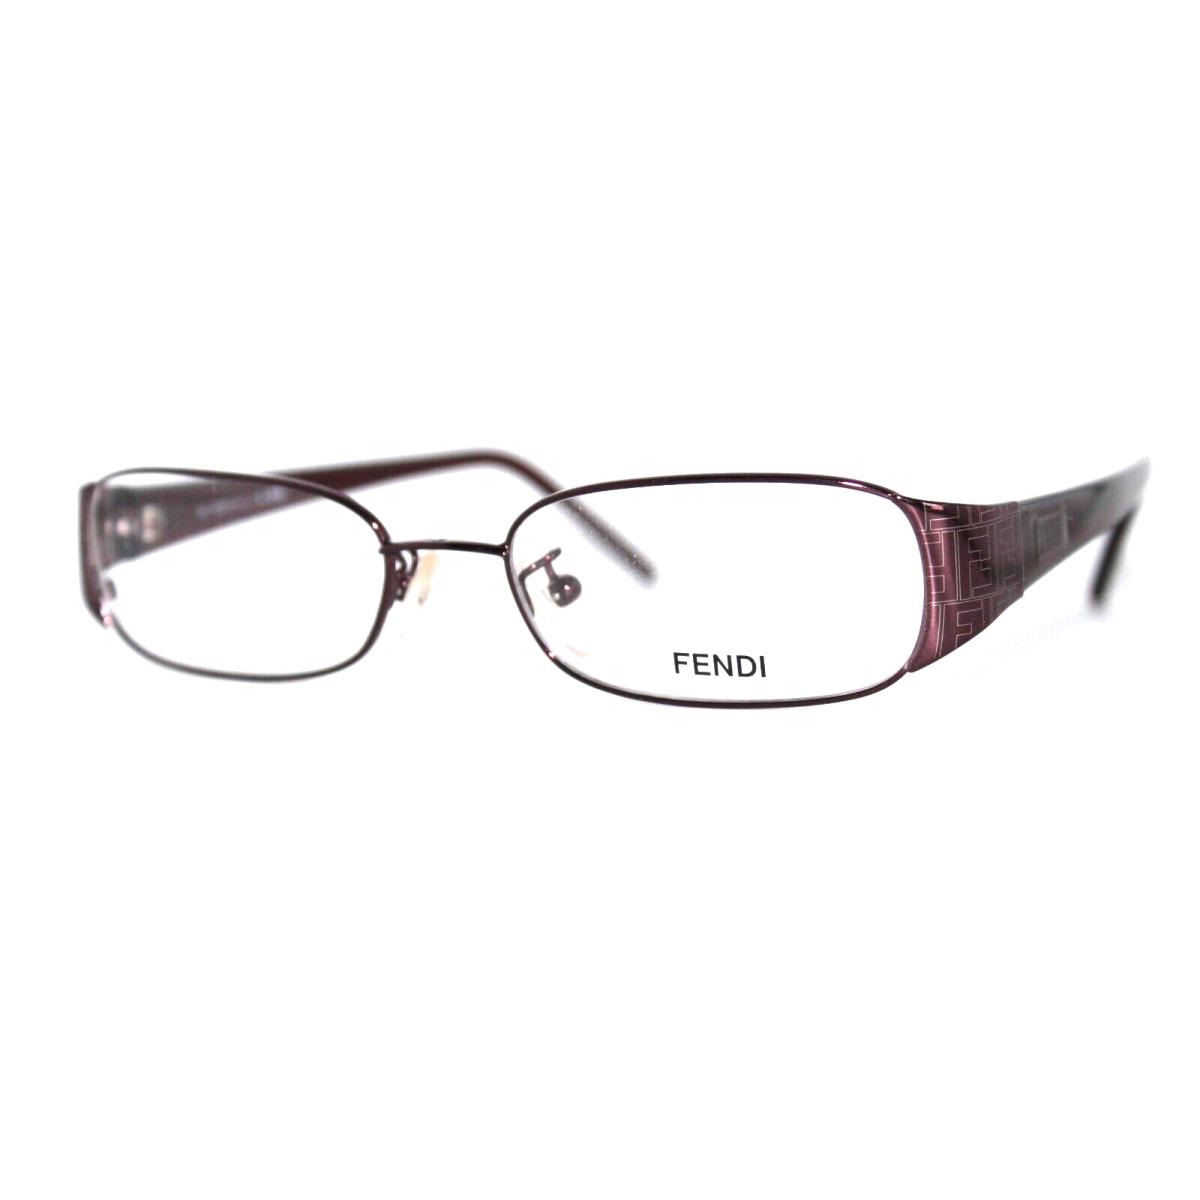 Fendi F653 603 Burgundy Eyeglasses Frames 52-16-135MM W/case